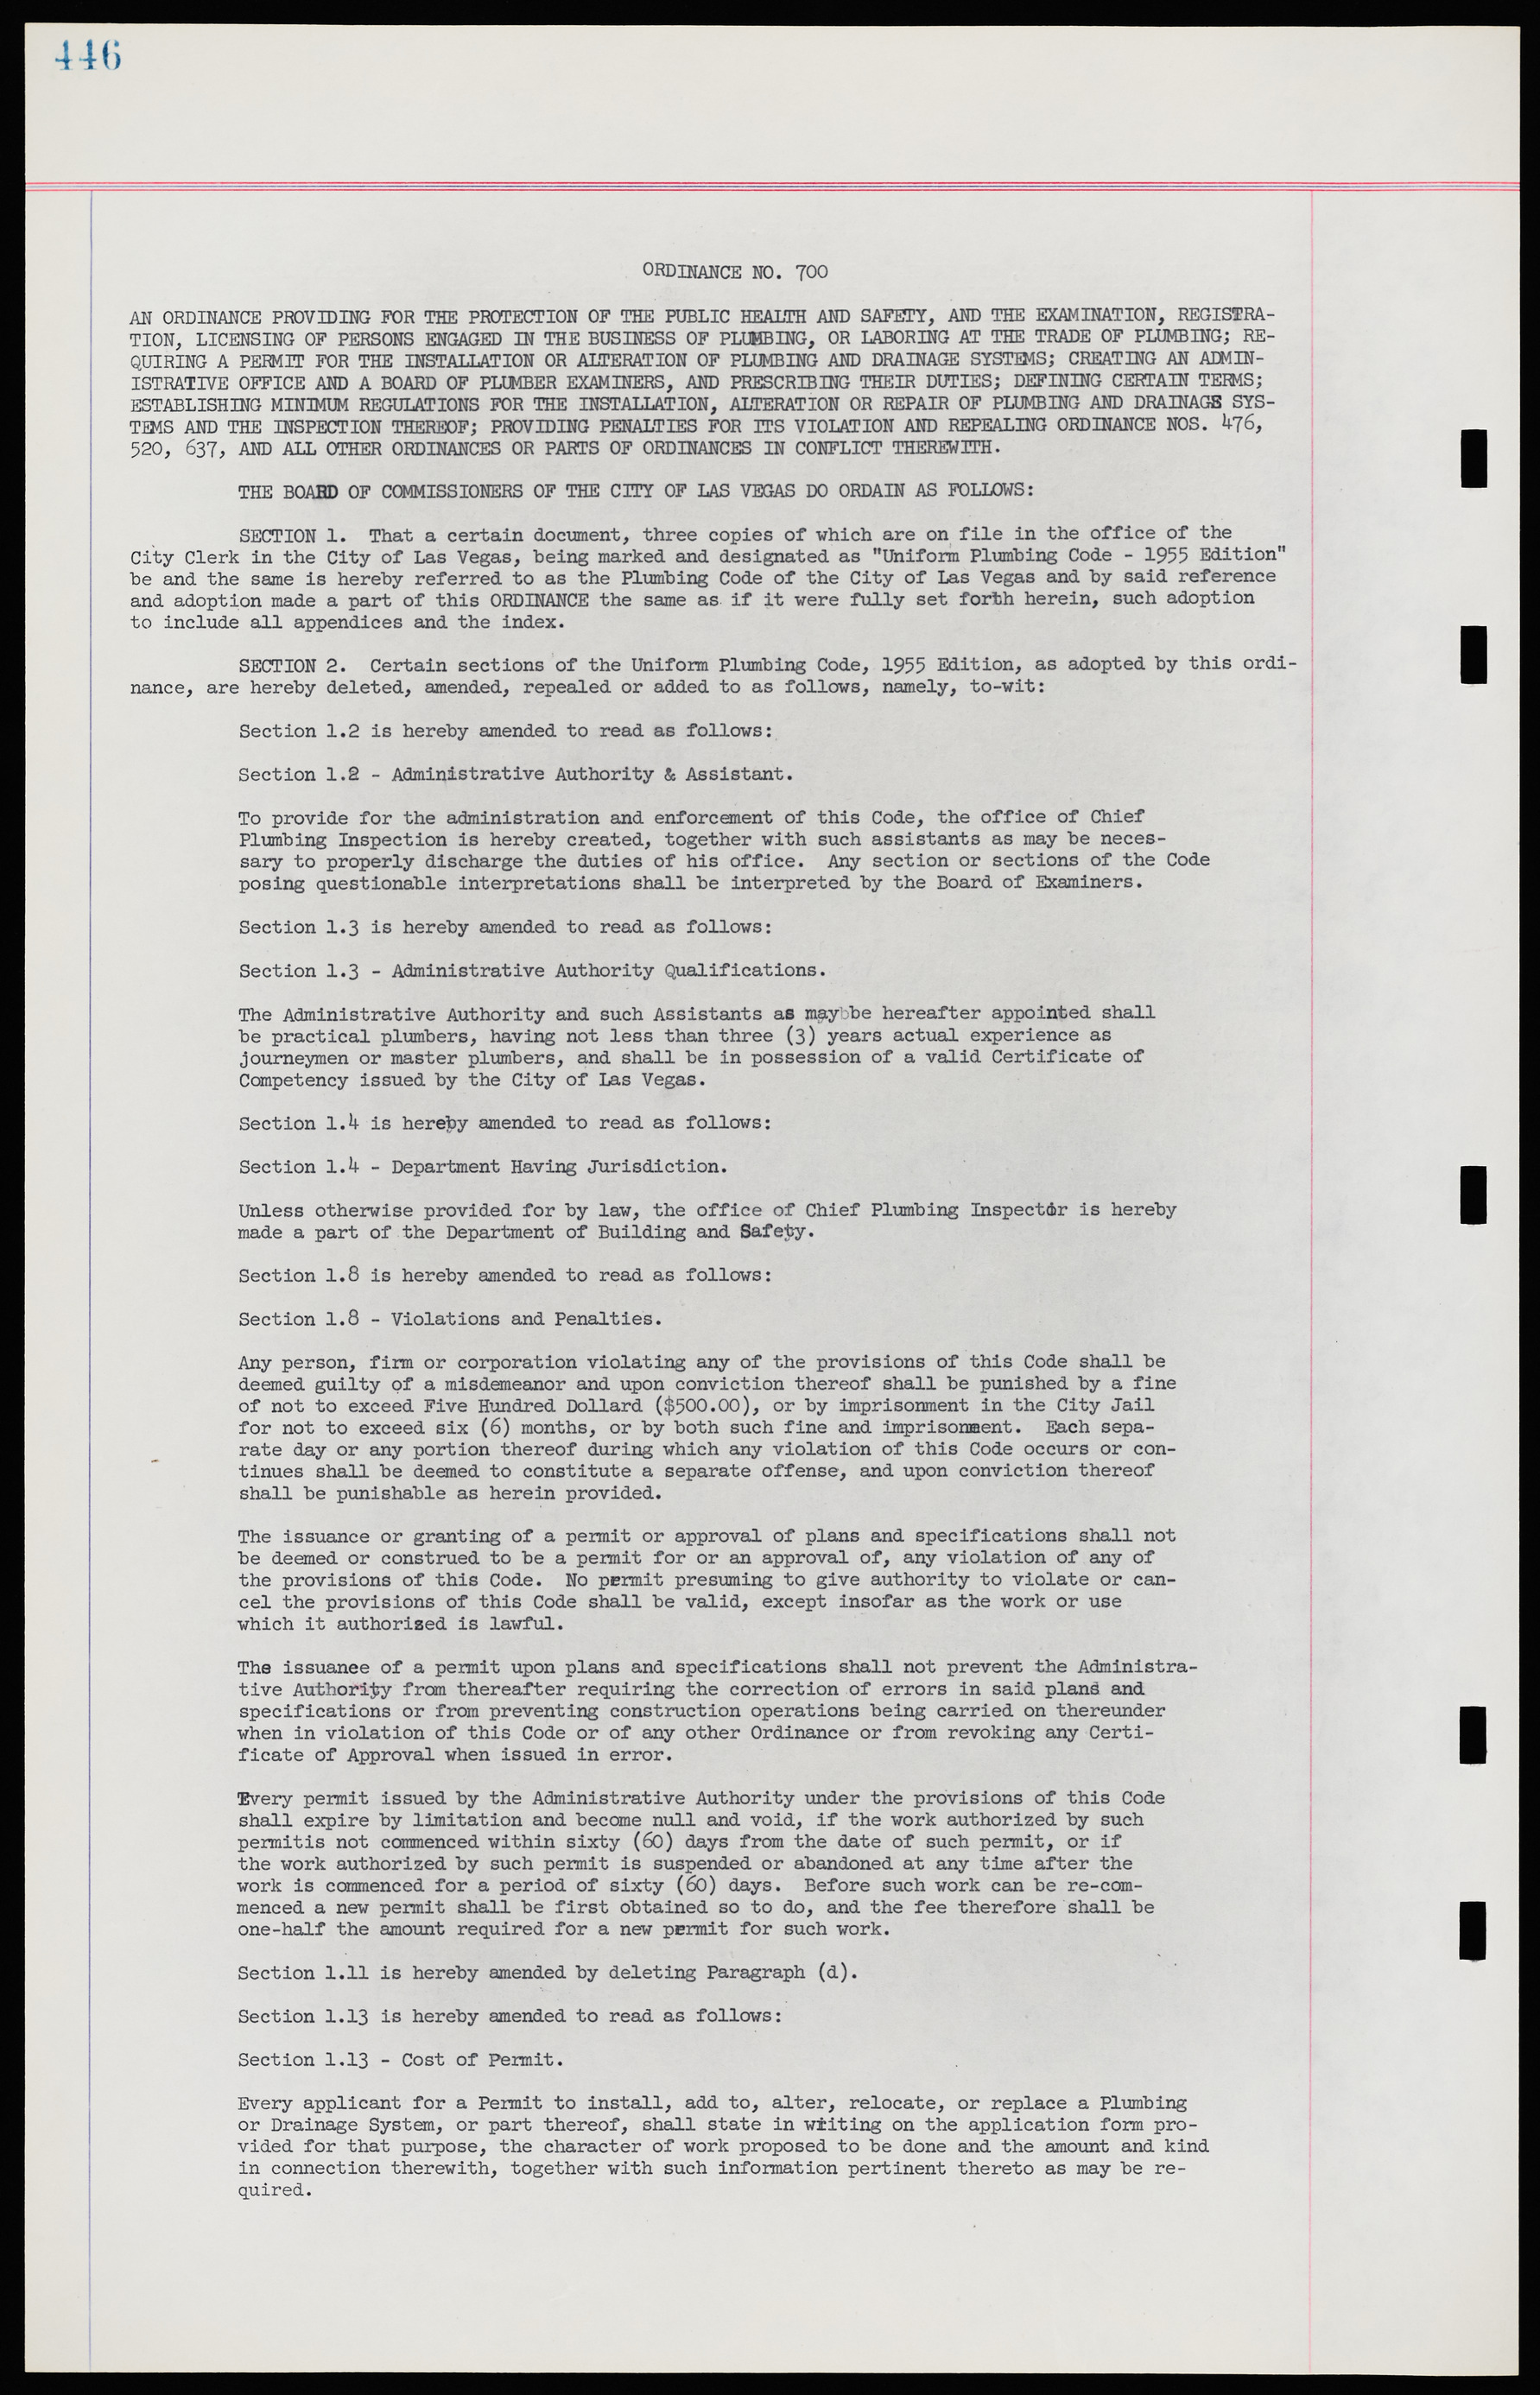 Las Vegas City Ordinances, November 13, 1950 to August 6, 1958, lvc000015-454